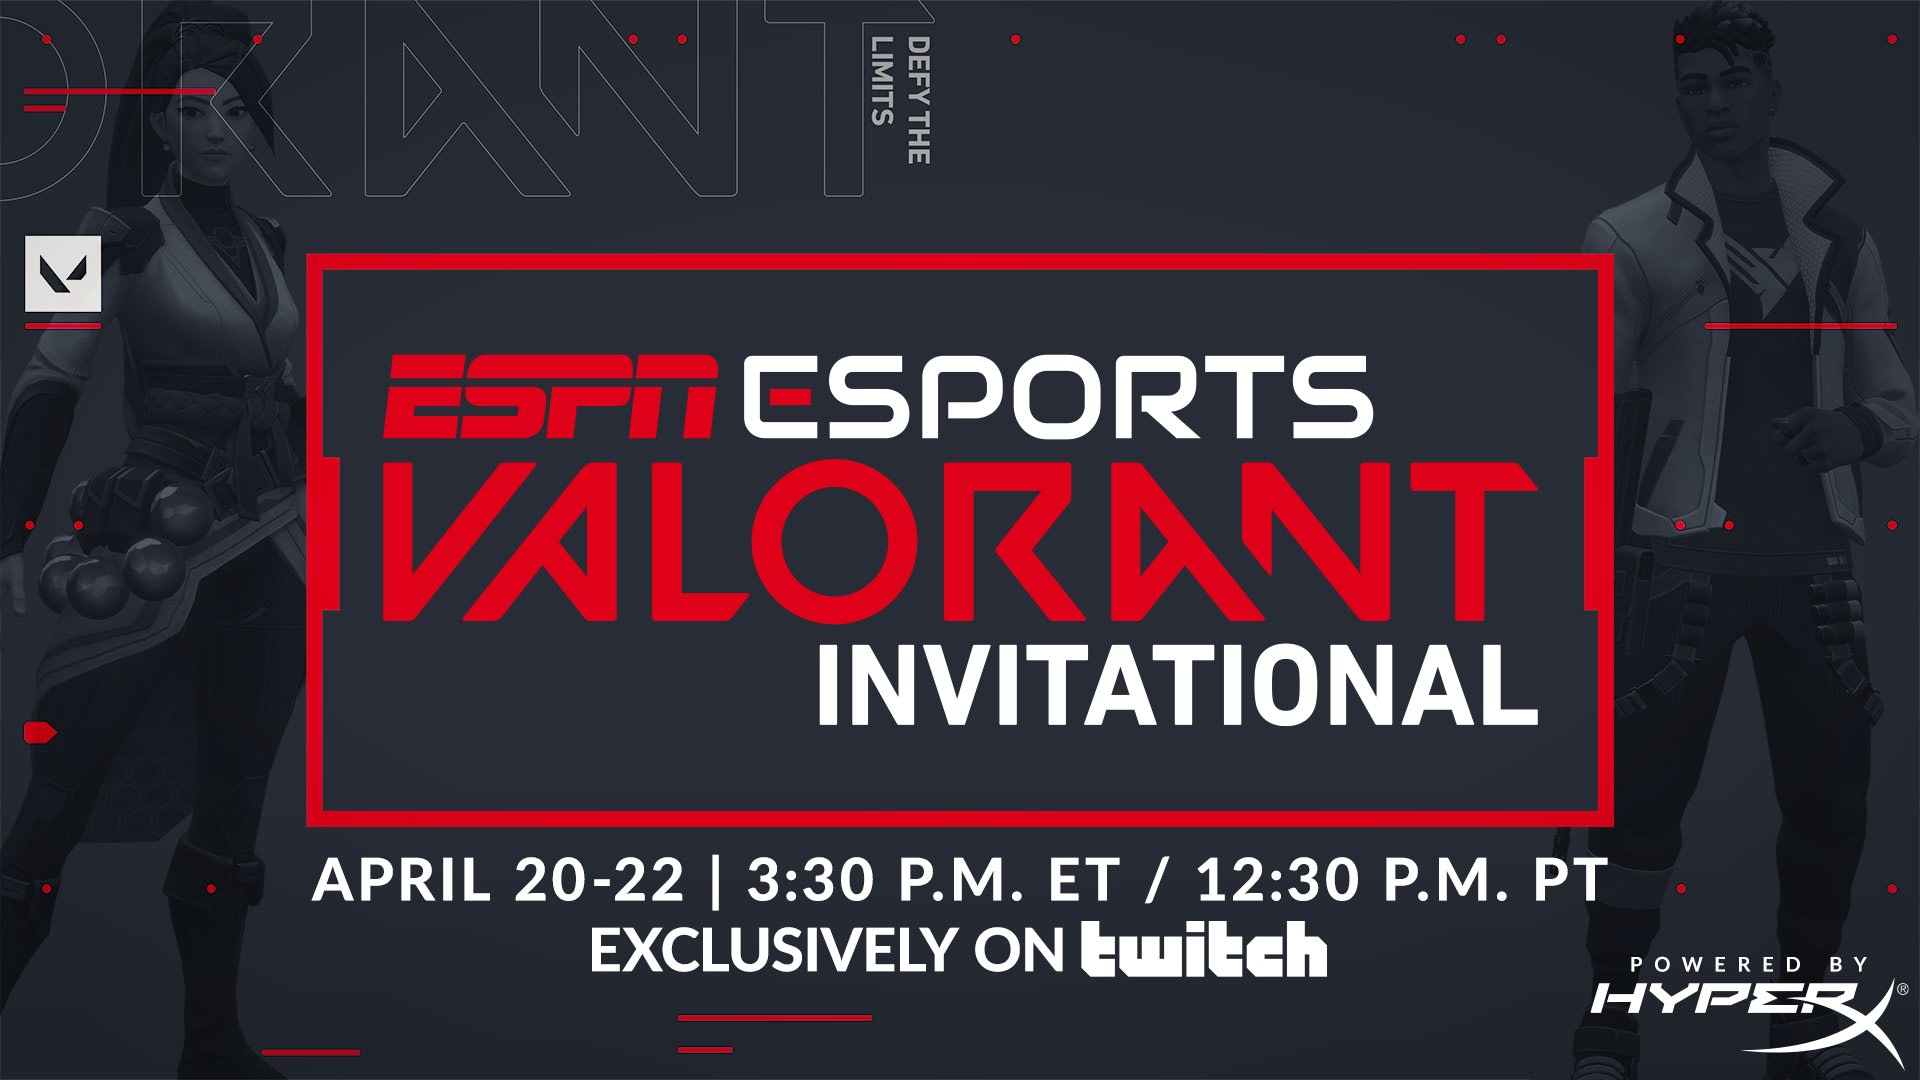 ESPN Esports Will Host The Valorant Invitational On April 20th